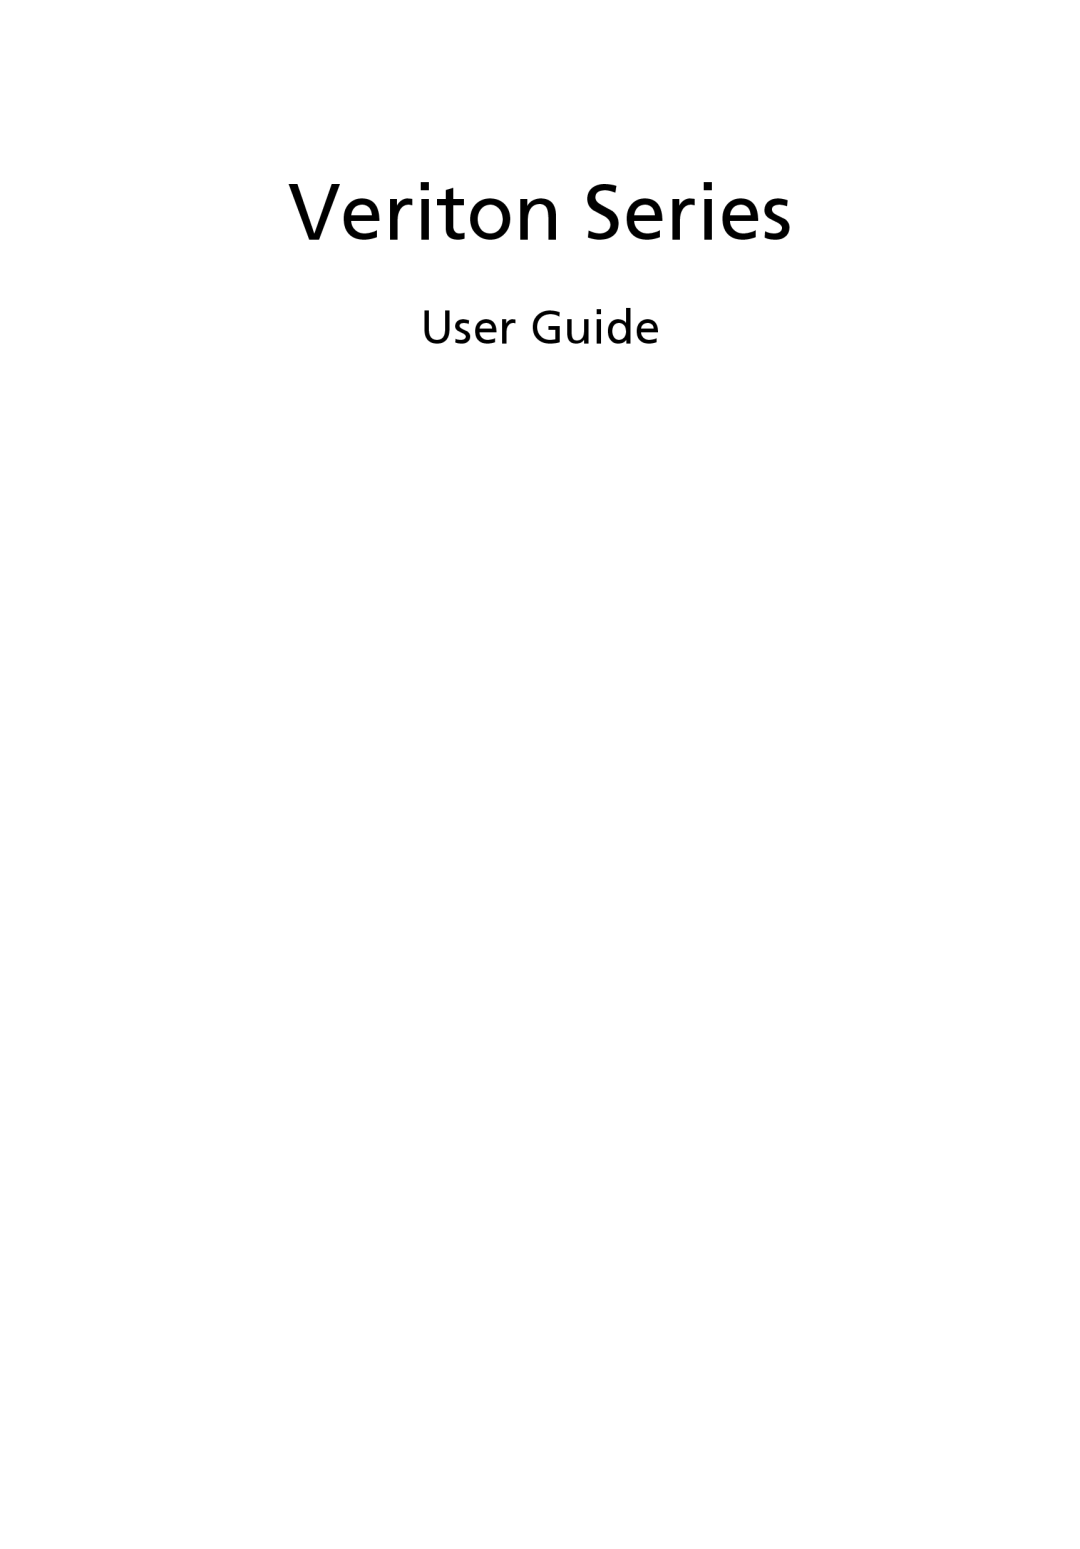 Acer N260G manual User Guide, Veriton Series 